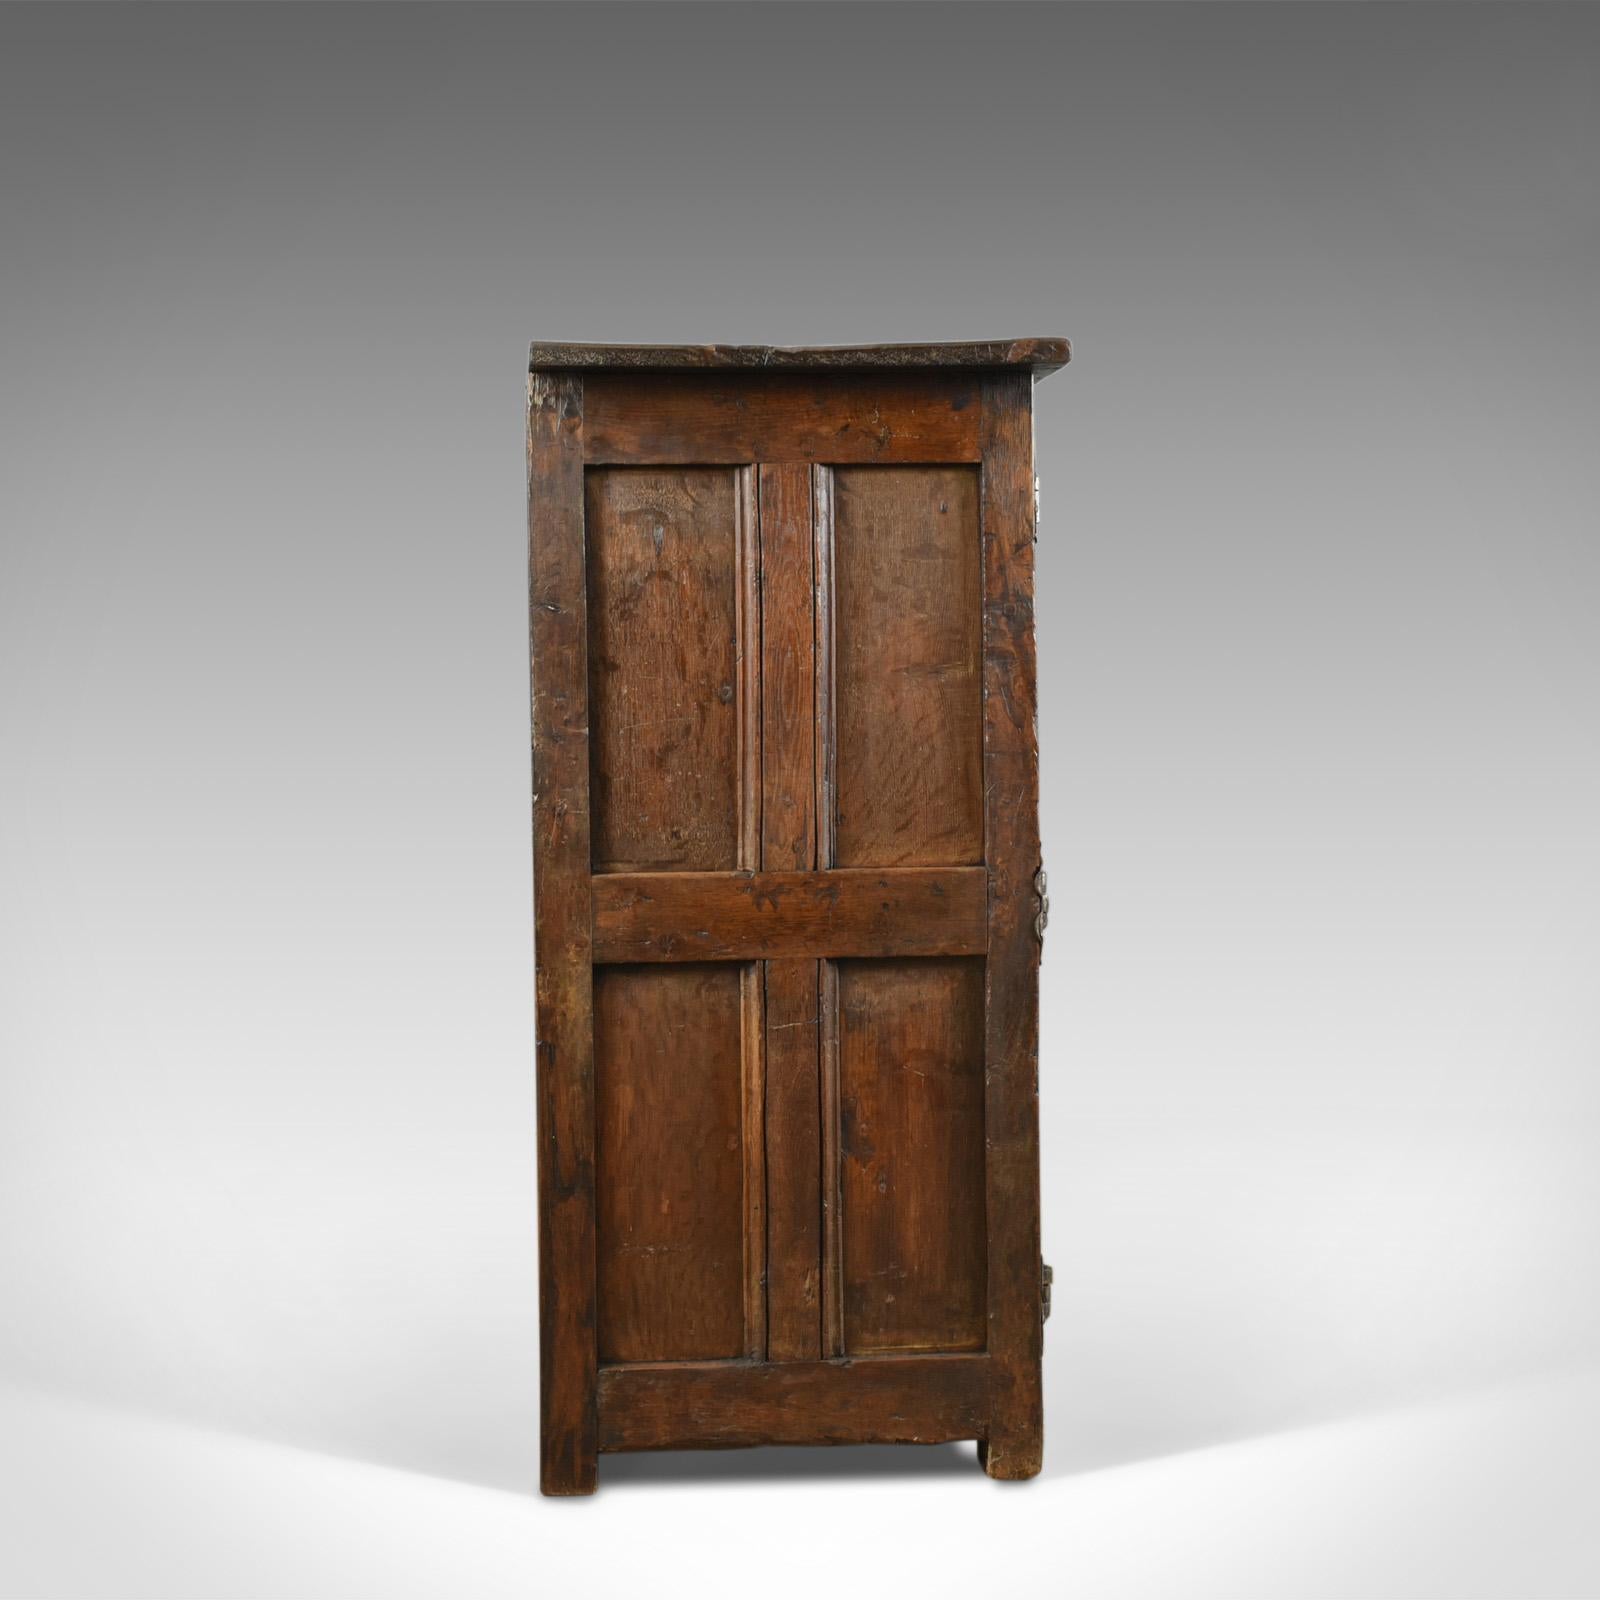 James II Antique Long Cupboard, Large Heavy Early English Oak Paneled